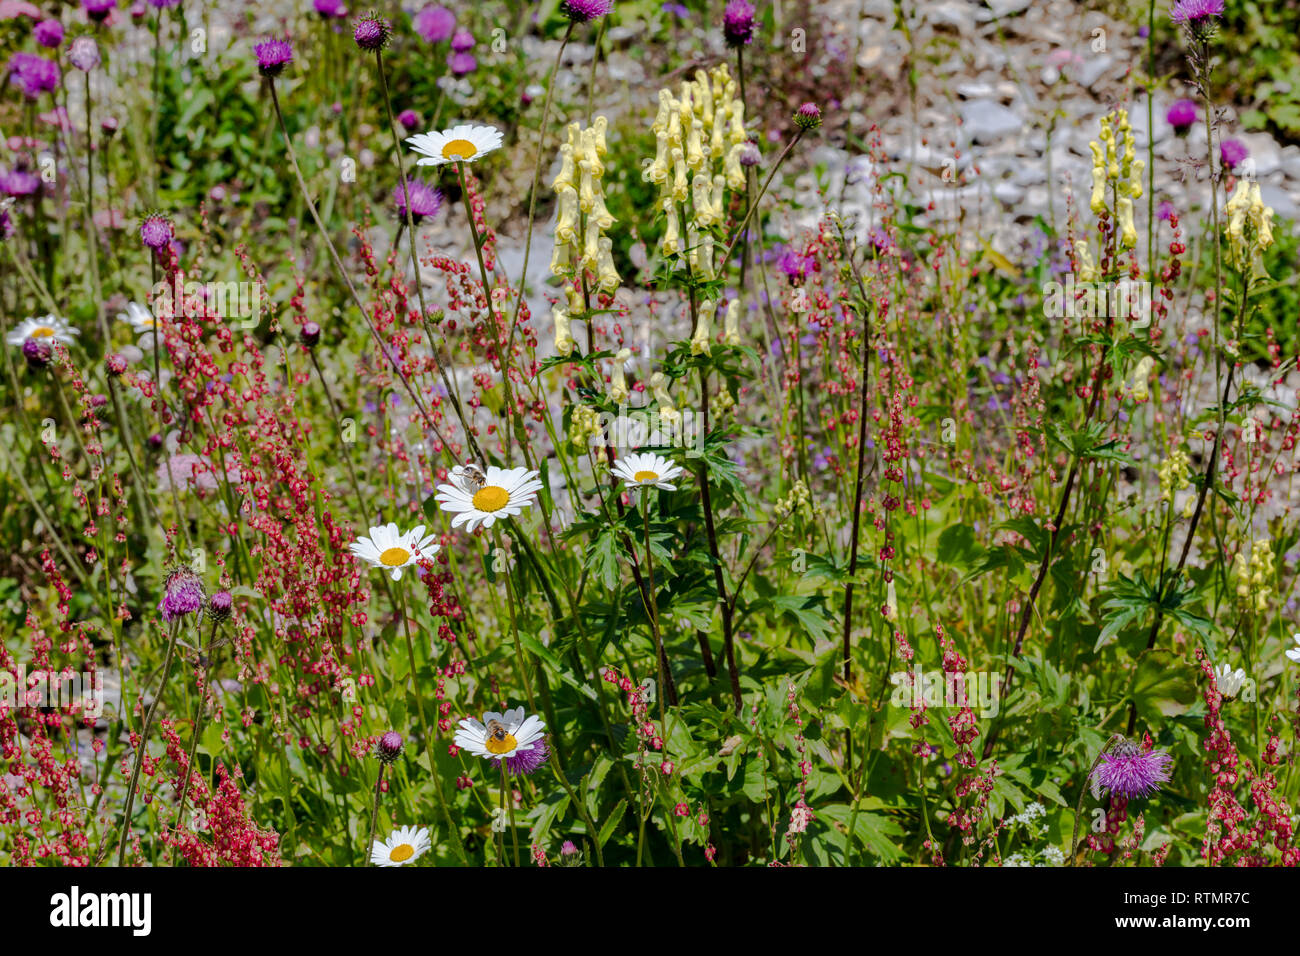 Wild flower meadow, margaritas, red clover, mountain cornflower, aster, daisy, composite, yellow aconite, yellow monk's-hood, in the Swiss Alps, Switz Stock Photo